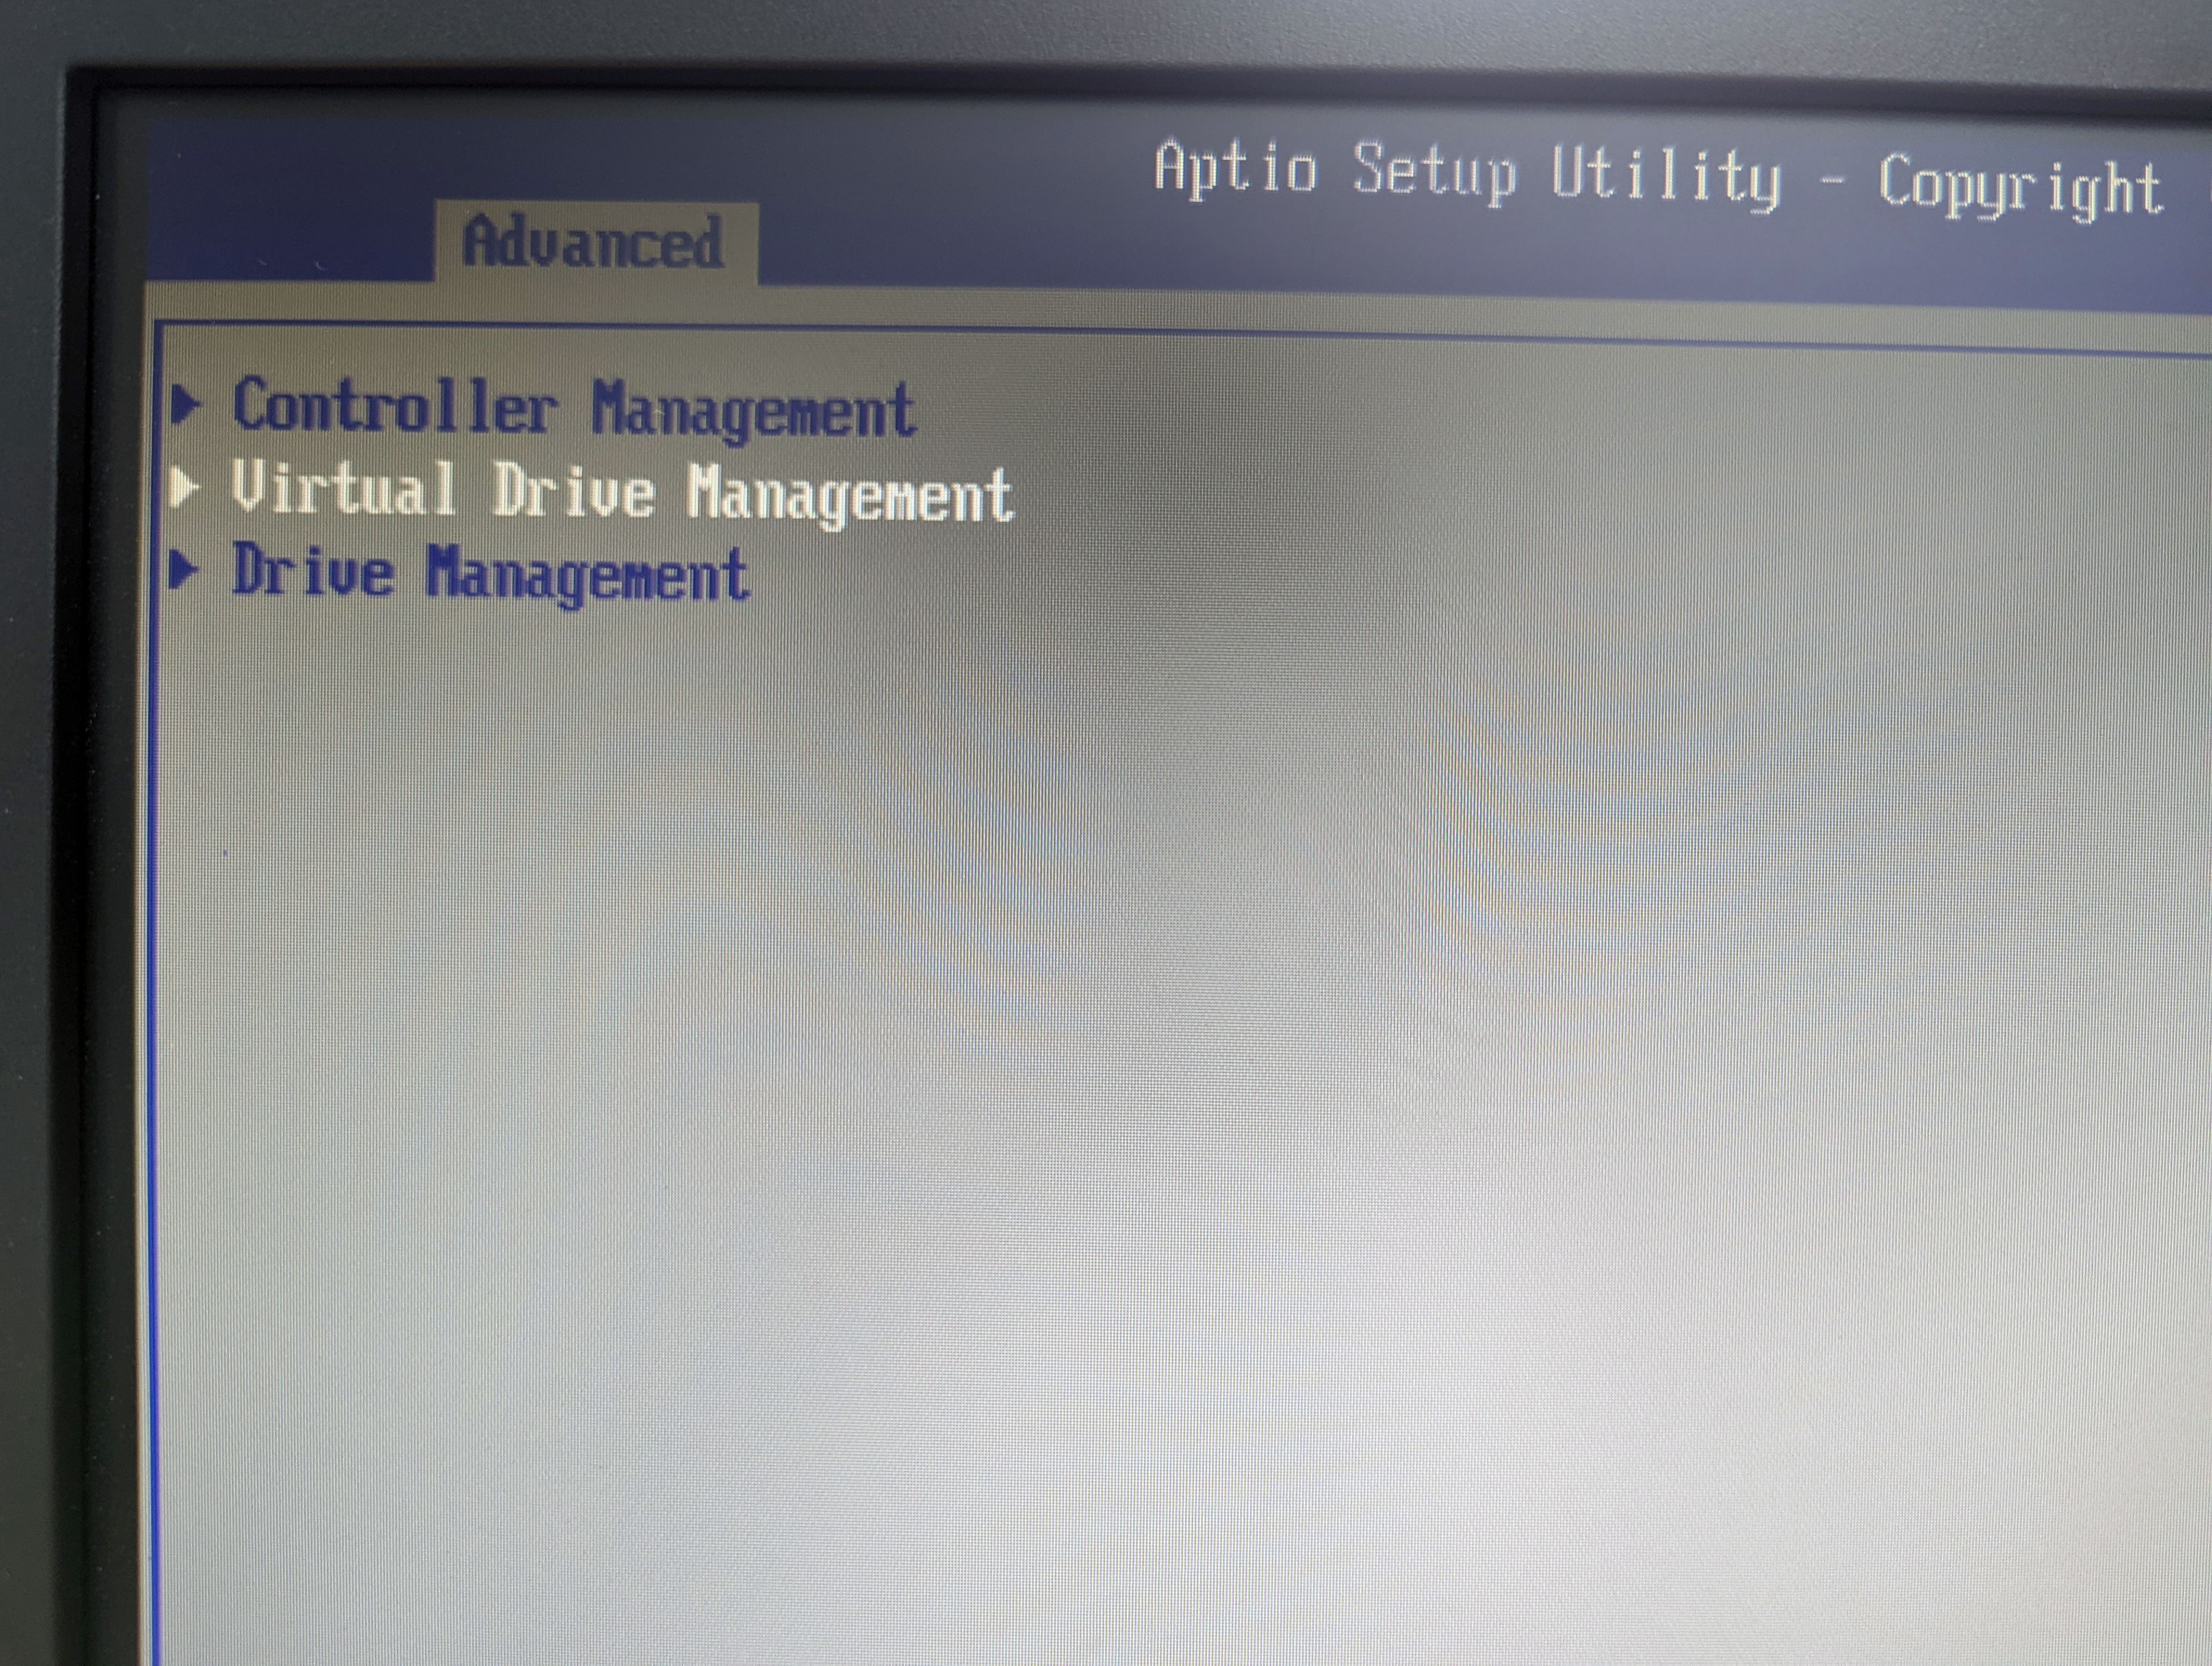 Virtual Drive Management